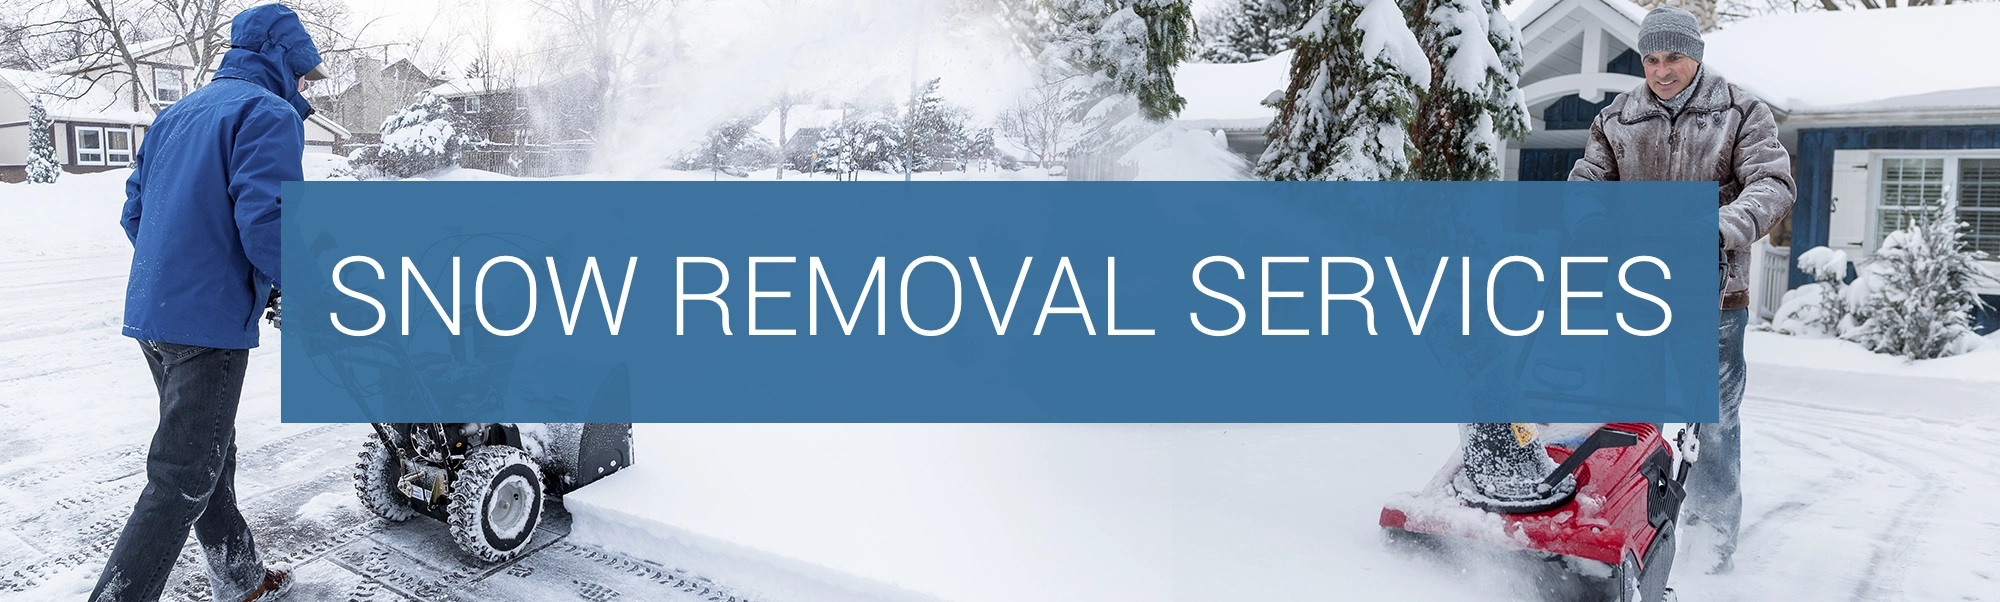 Lawn Care Services in Nebraska - Snow Removal